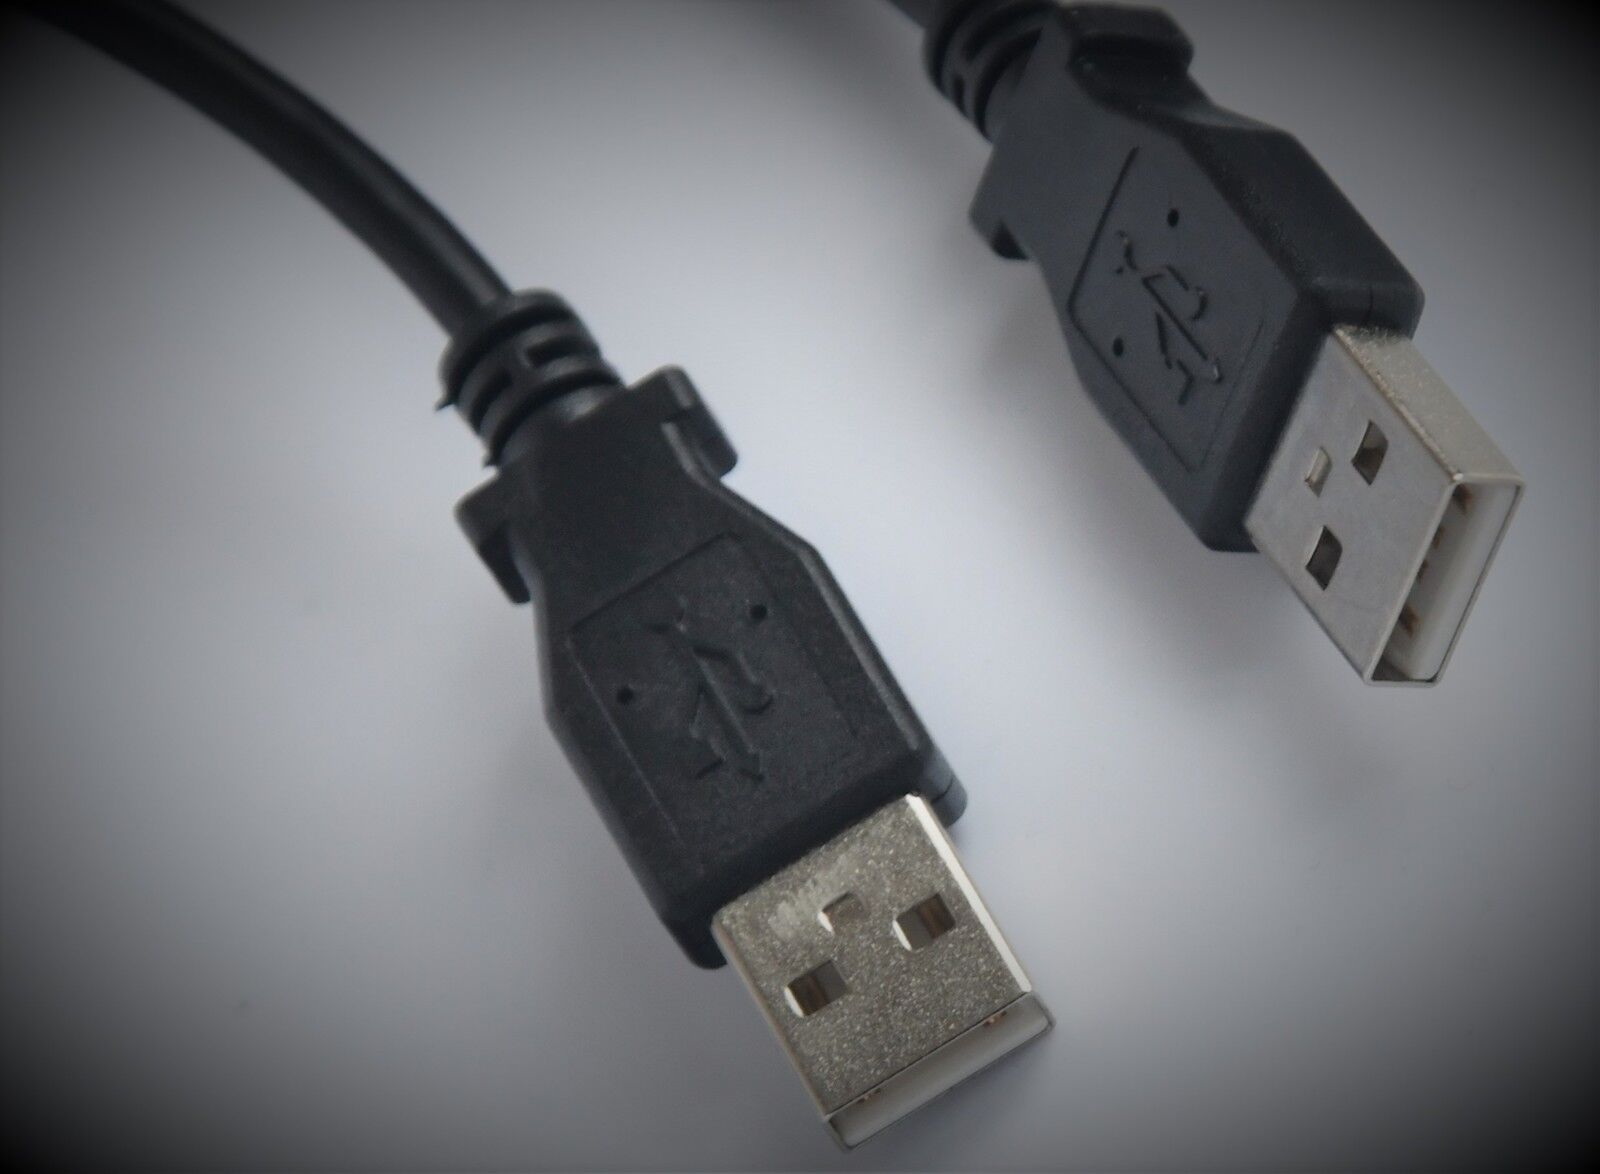 A900-CONS-KIT-U USB Console Kit, USB-to-USB cable Custom